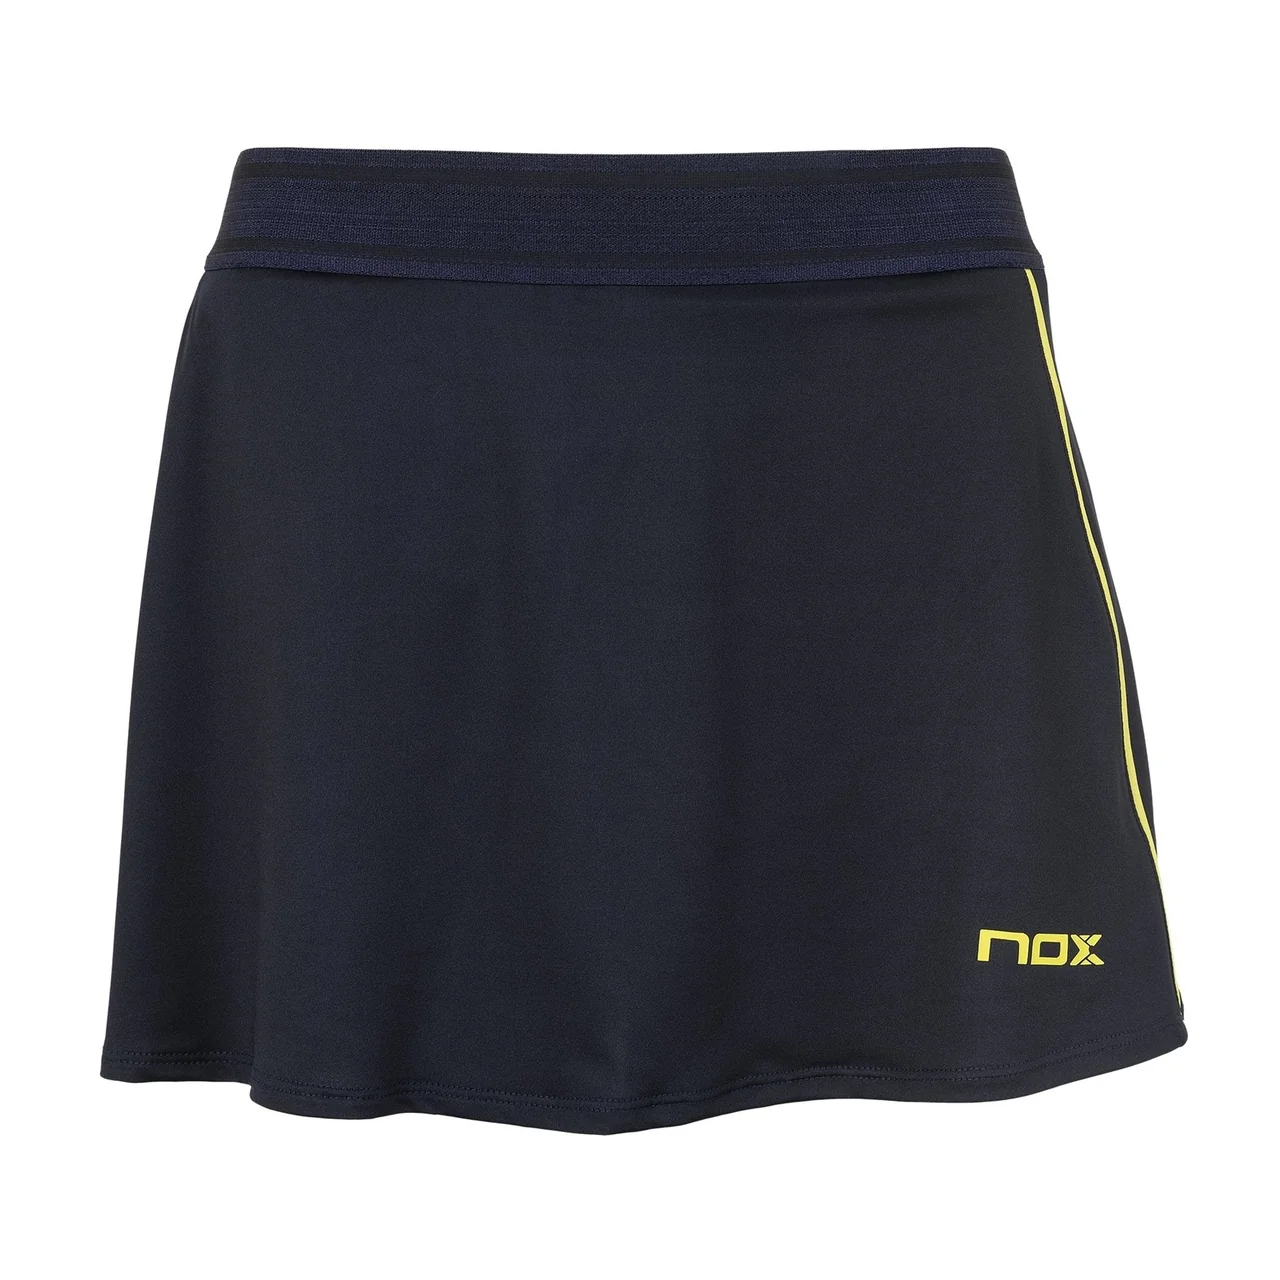 Nox Pro Skirt Navy